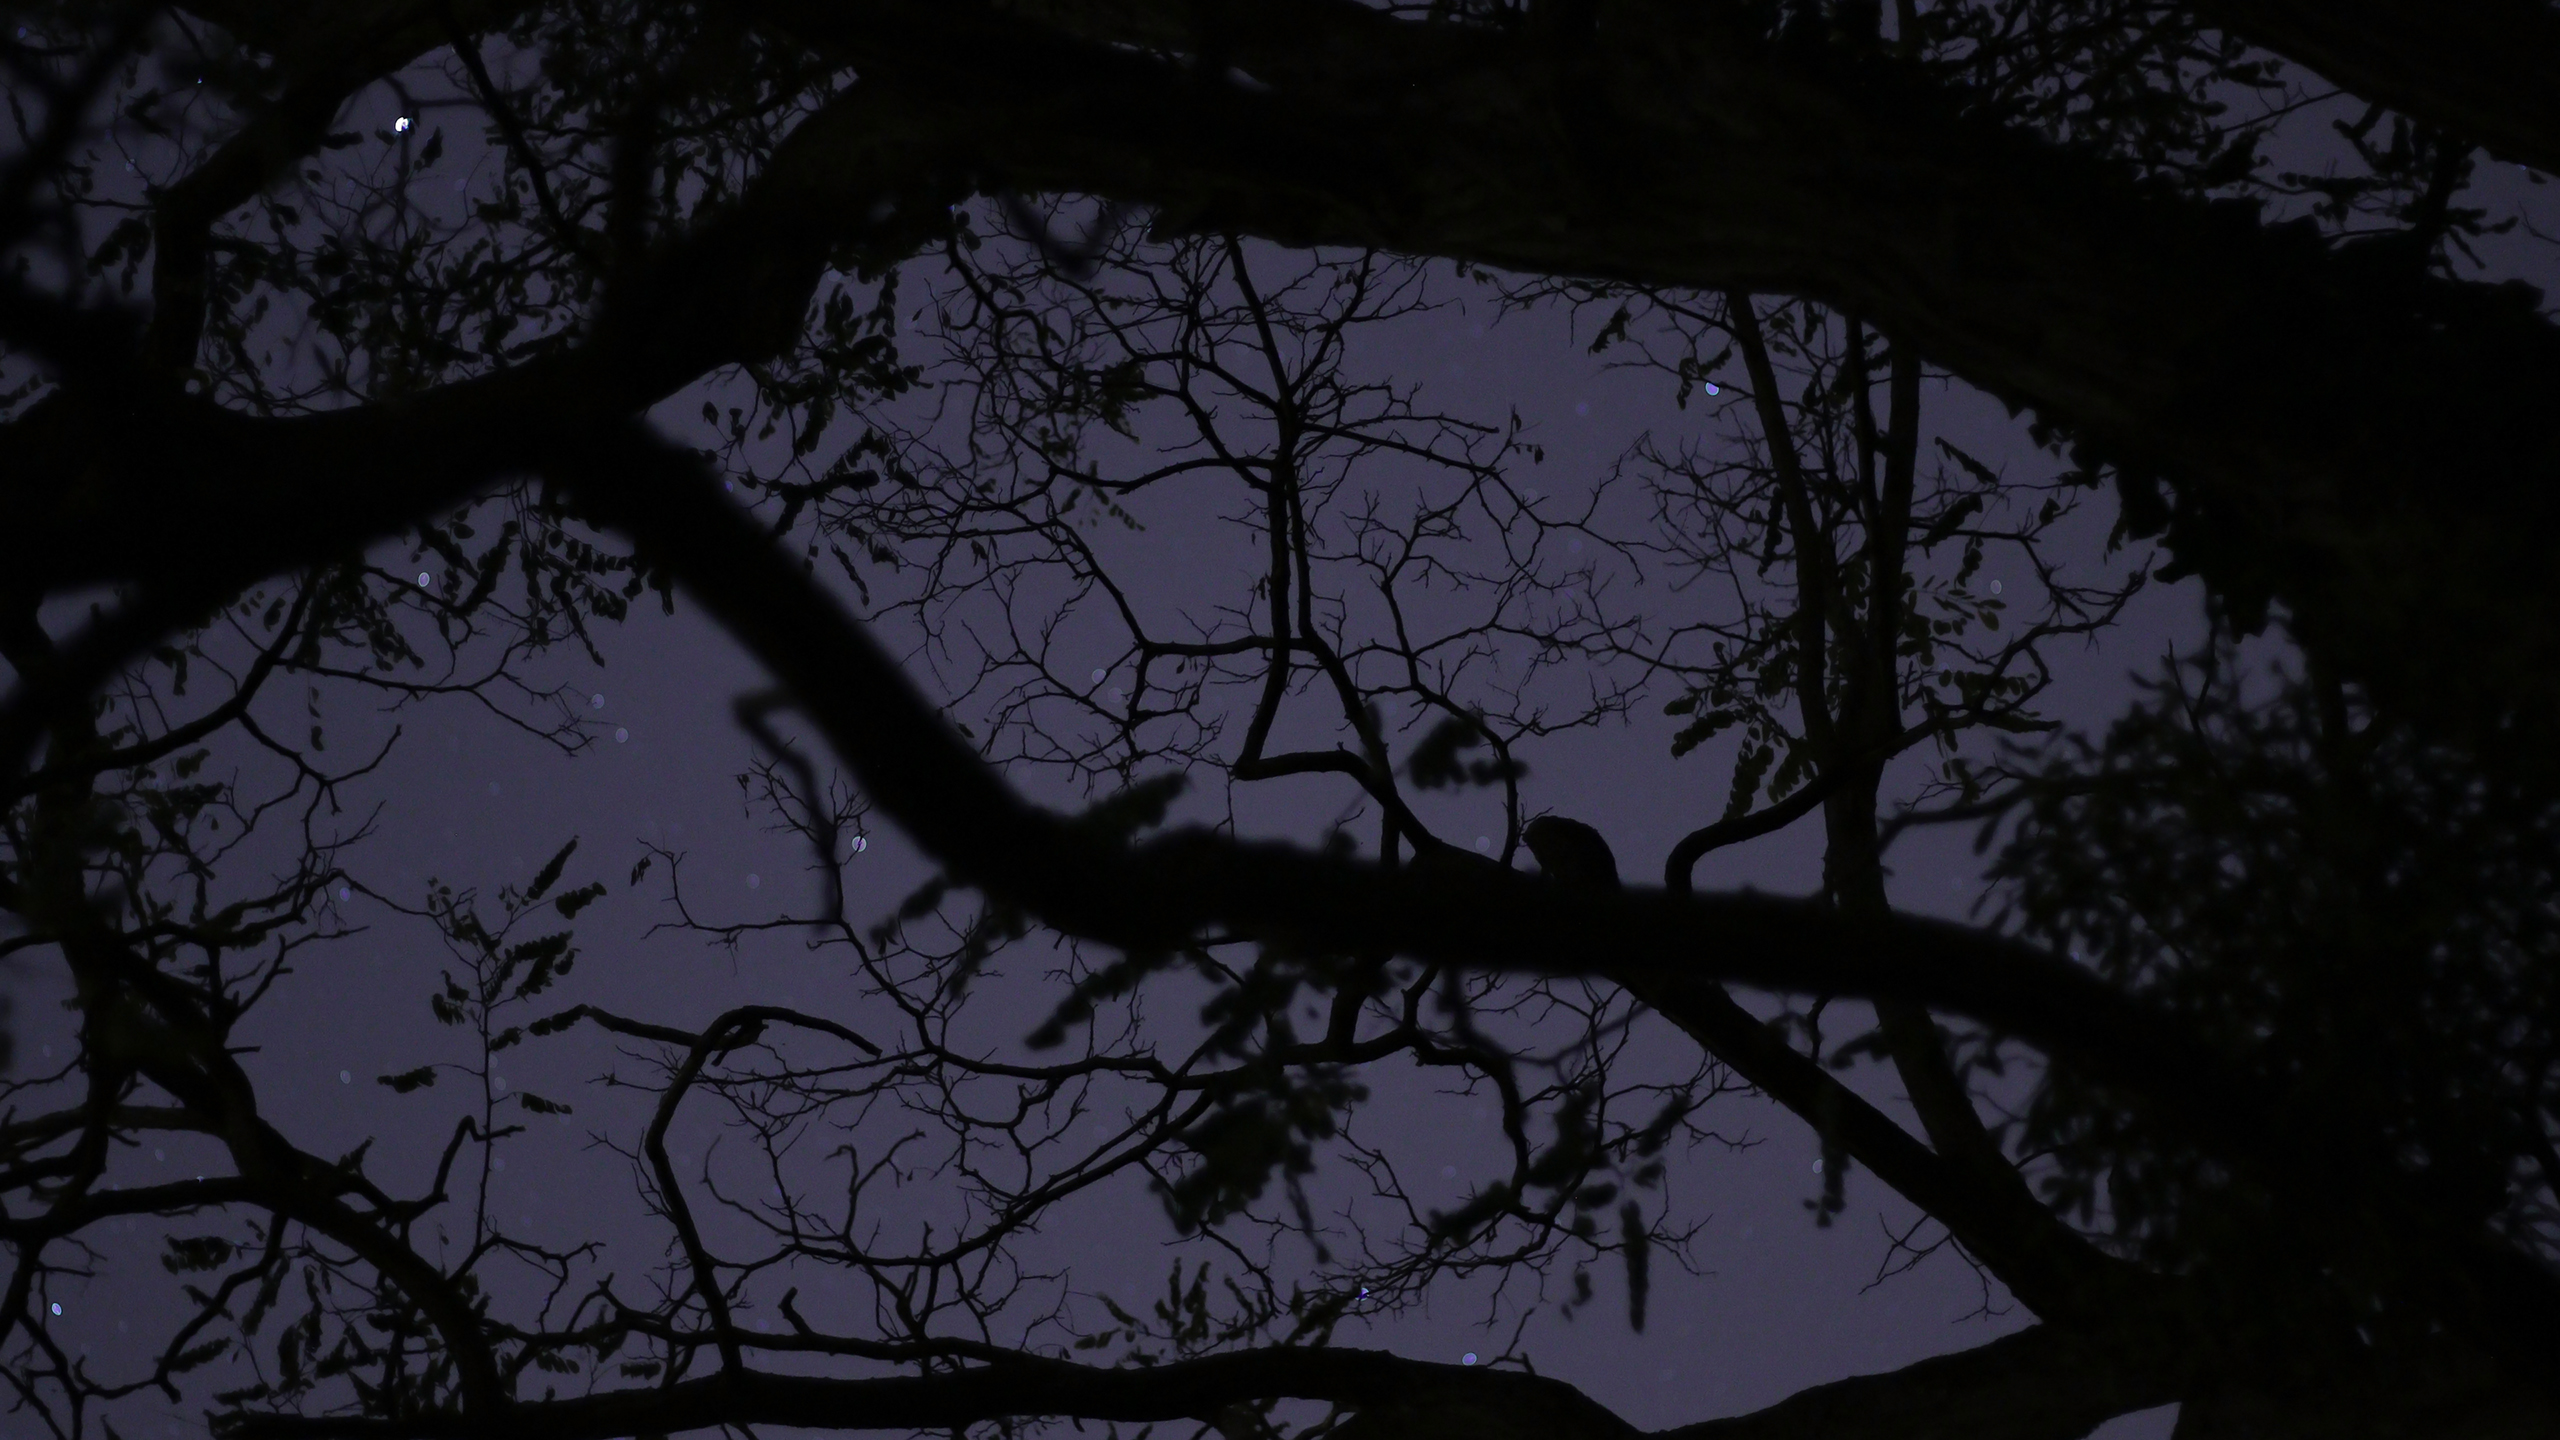 General 2560x1440 Nicolas Saulnier night stars silhouette trees branch nature